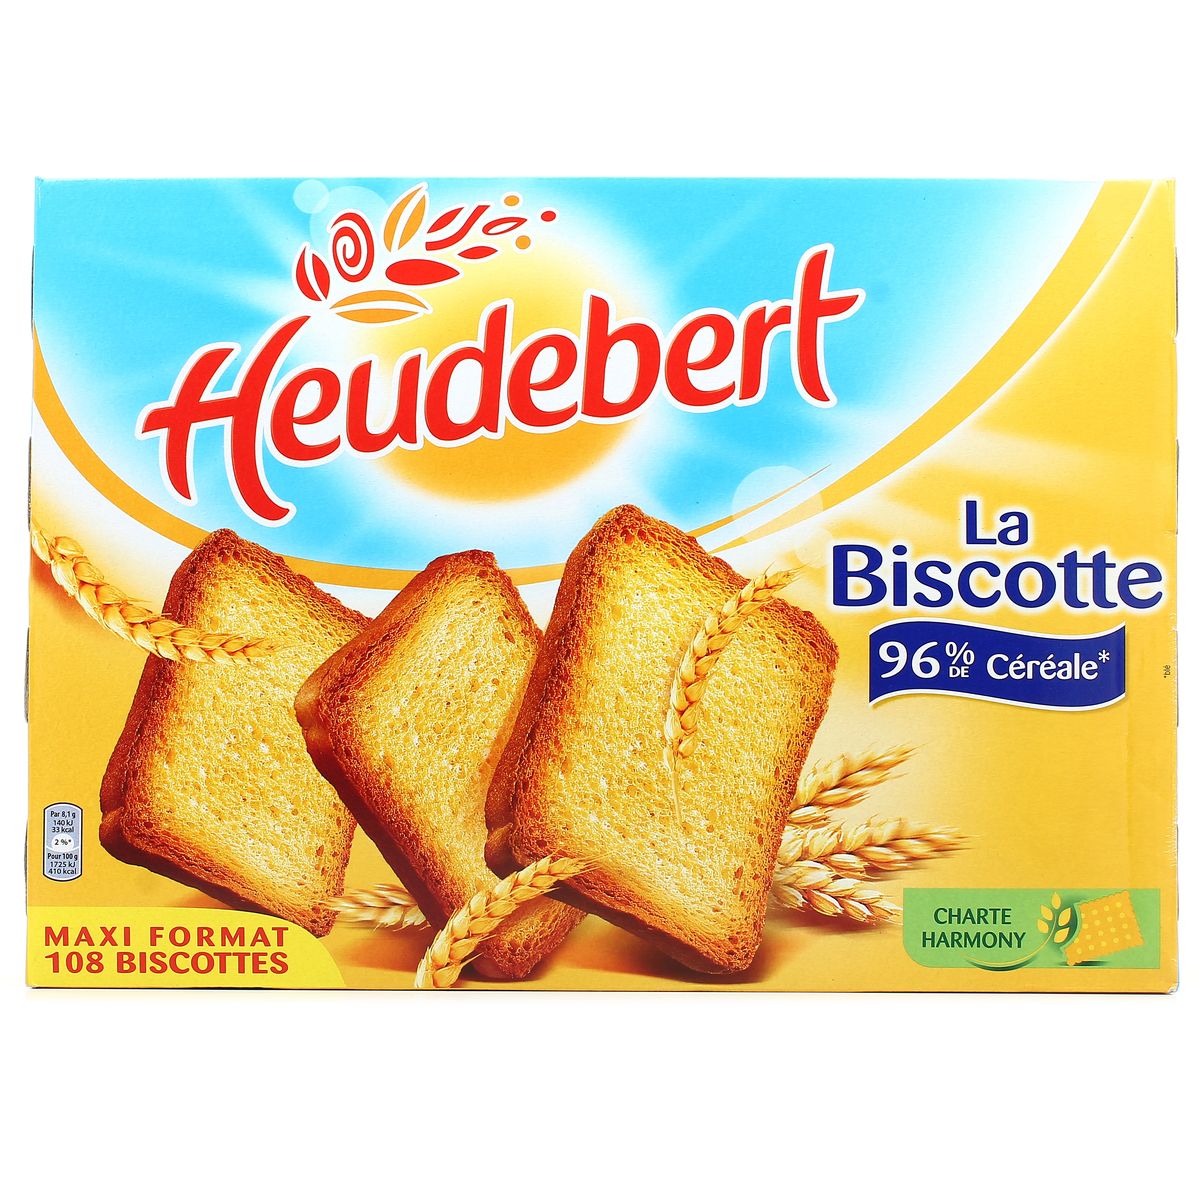 French Biscotte Heudebert